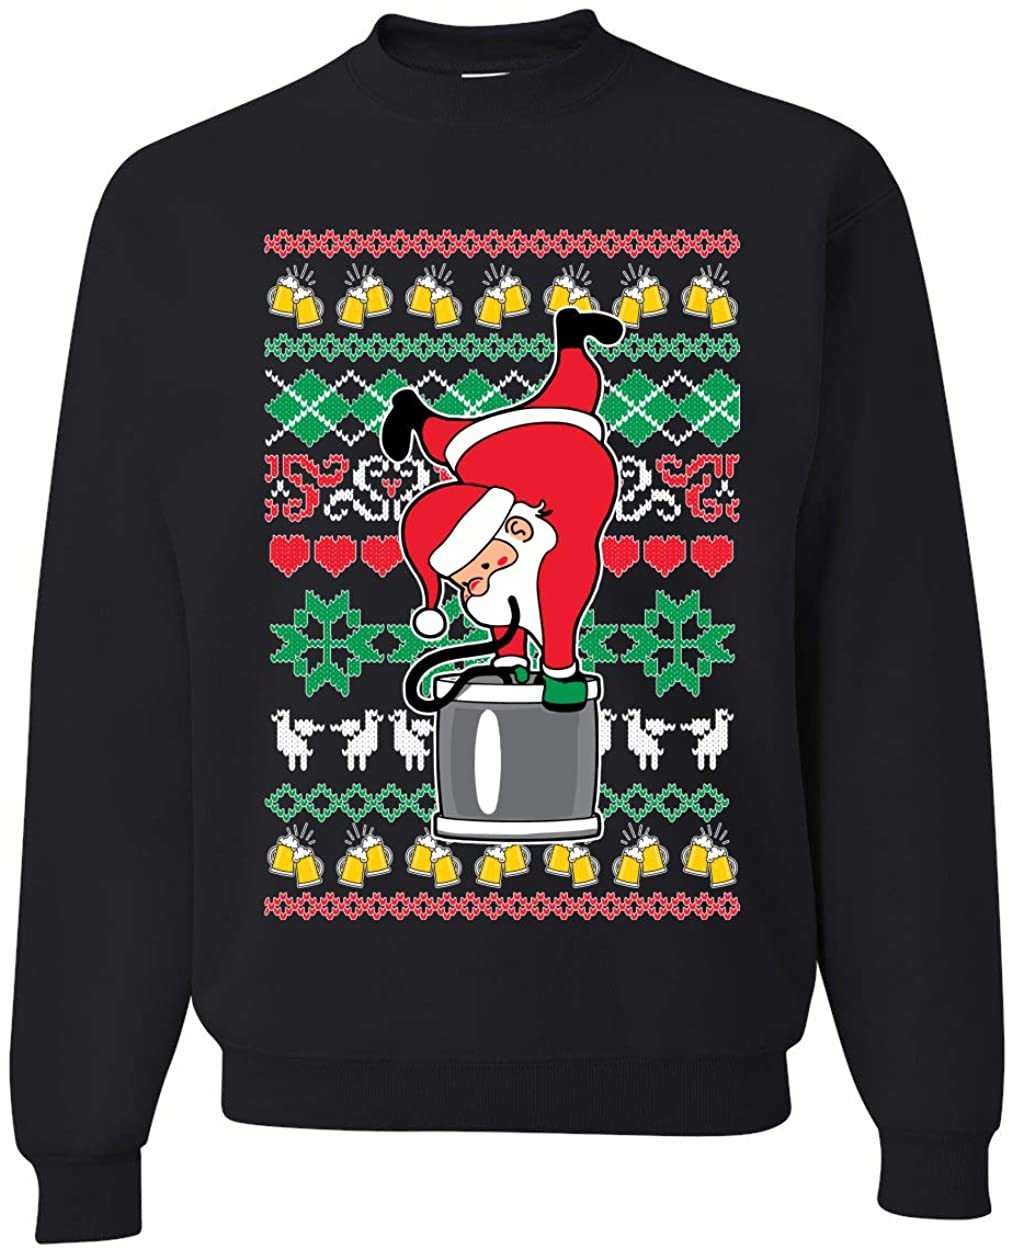 Santa Keg Stand Beer Drinking Drunk Ugly Christmas  T-Shirt